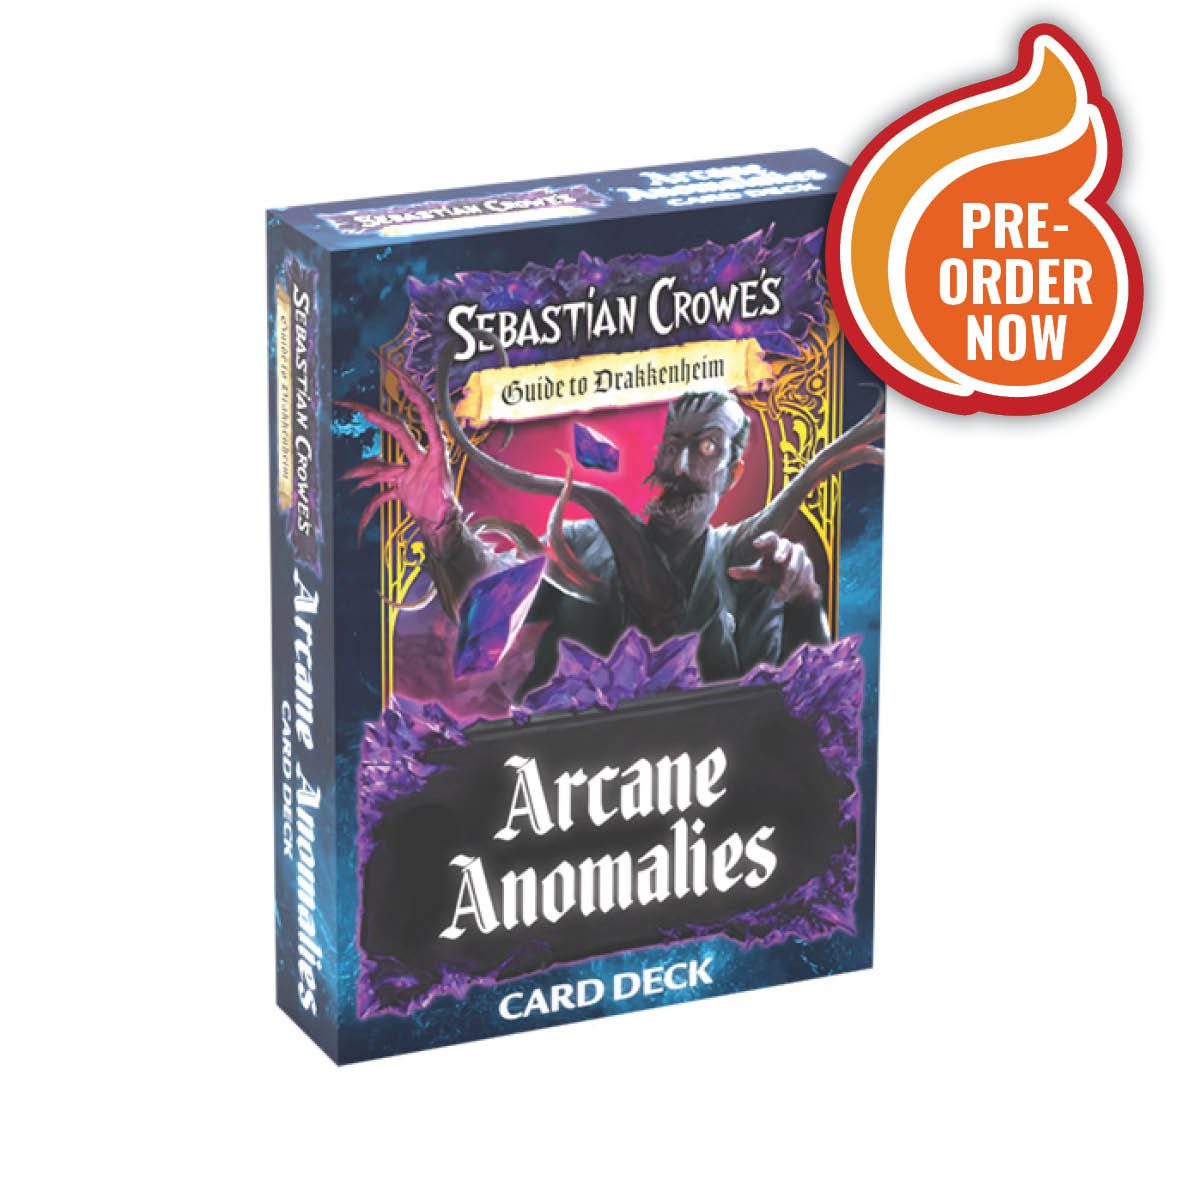 Sebastian Crowe’s Guide to Drakkenheim: Arcane Anomalies Card Deck